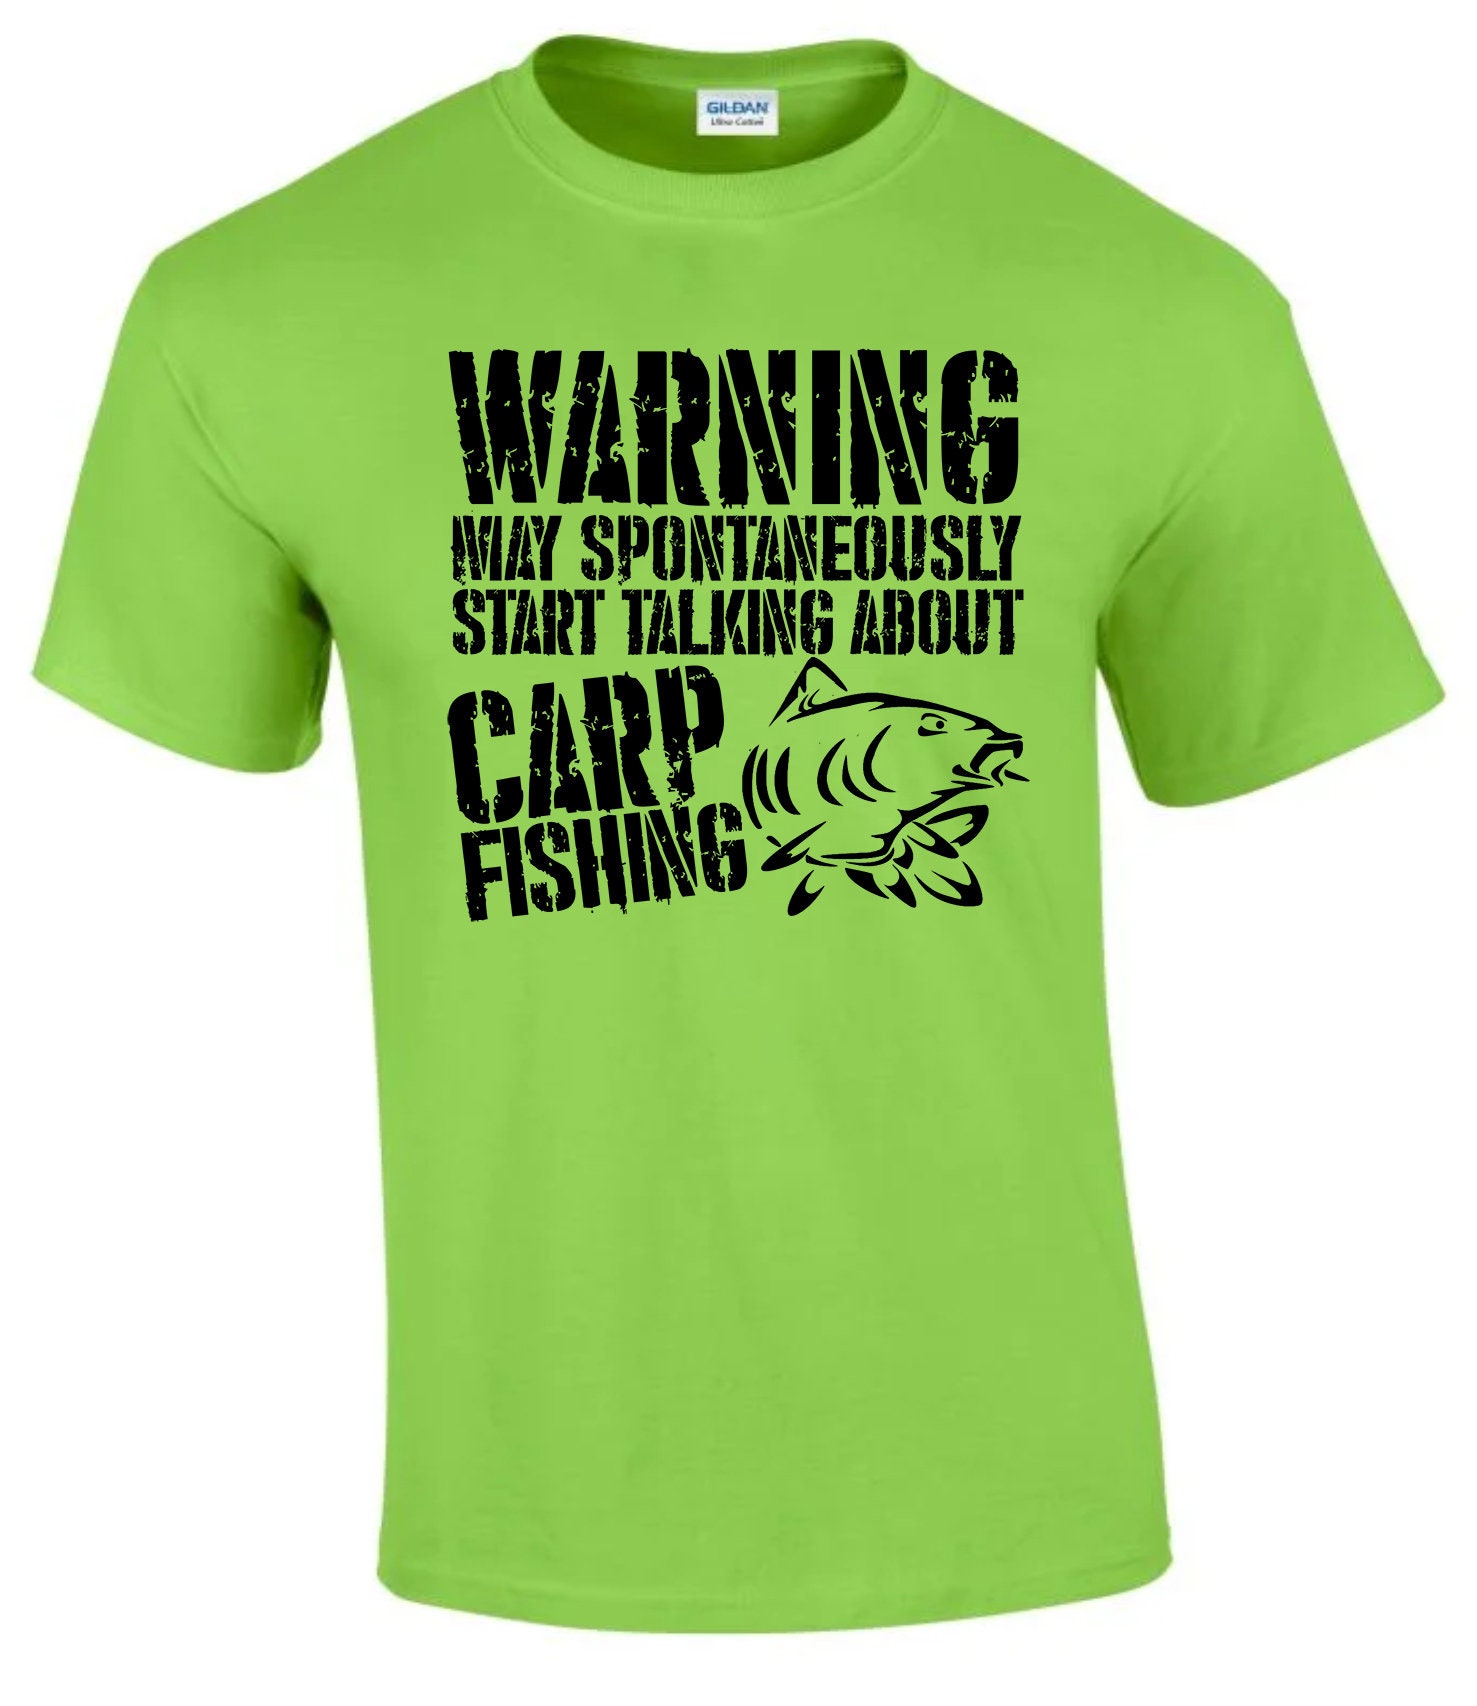 Carp Fishing T-shirt for Men and Women , Funny Fishing Shirt, Fishing Graphic Tee, Fisherman Gifts, Present For fisherman